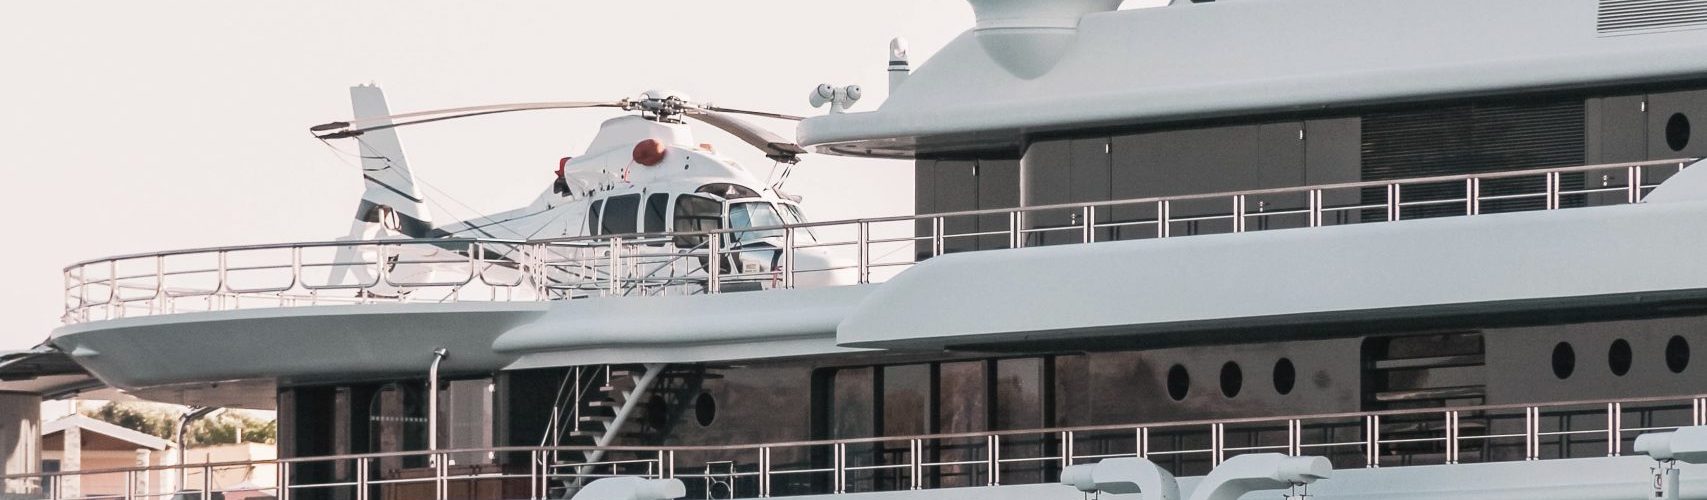 berthforsuperyacht private pilot service for superyachts